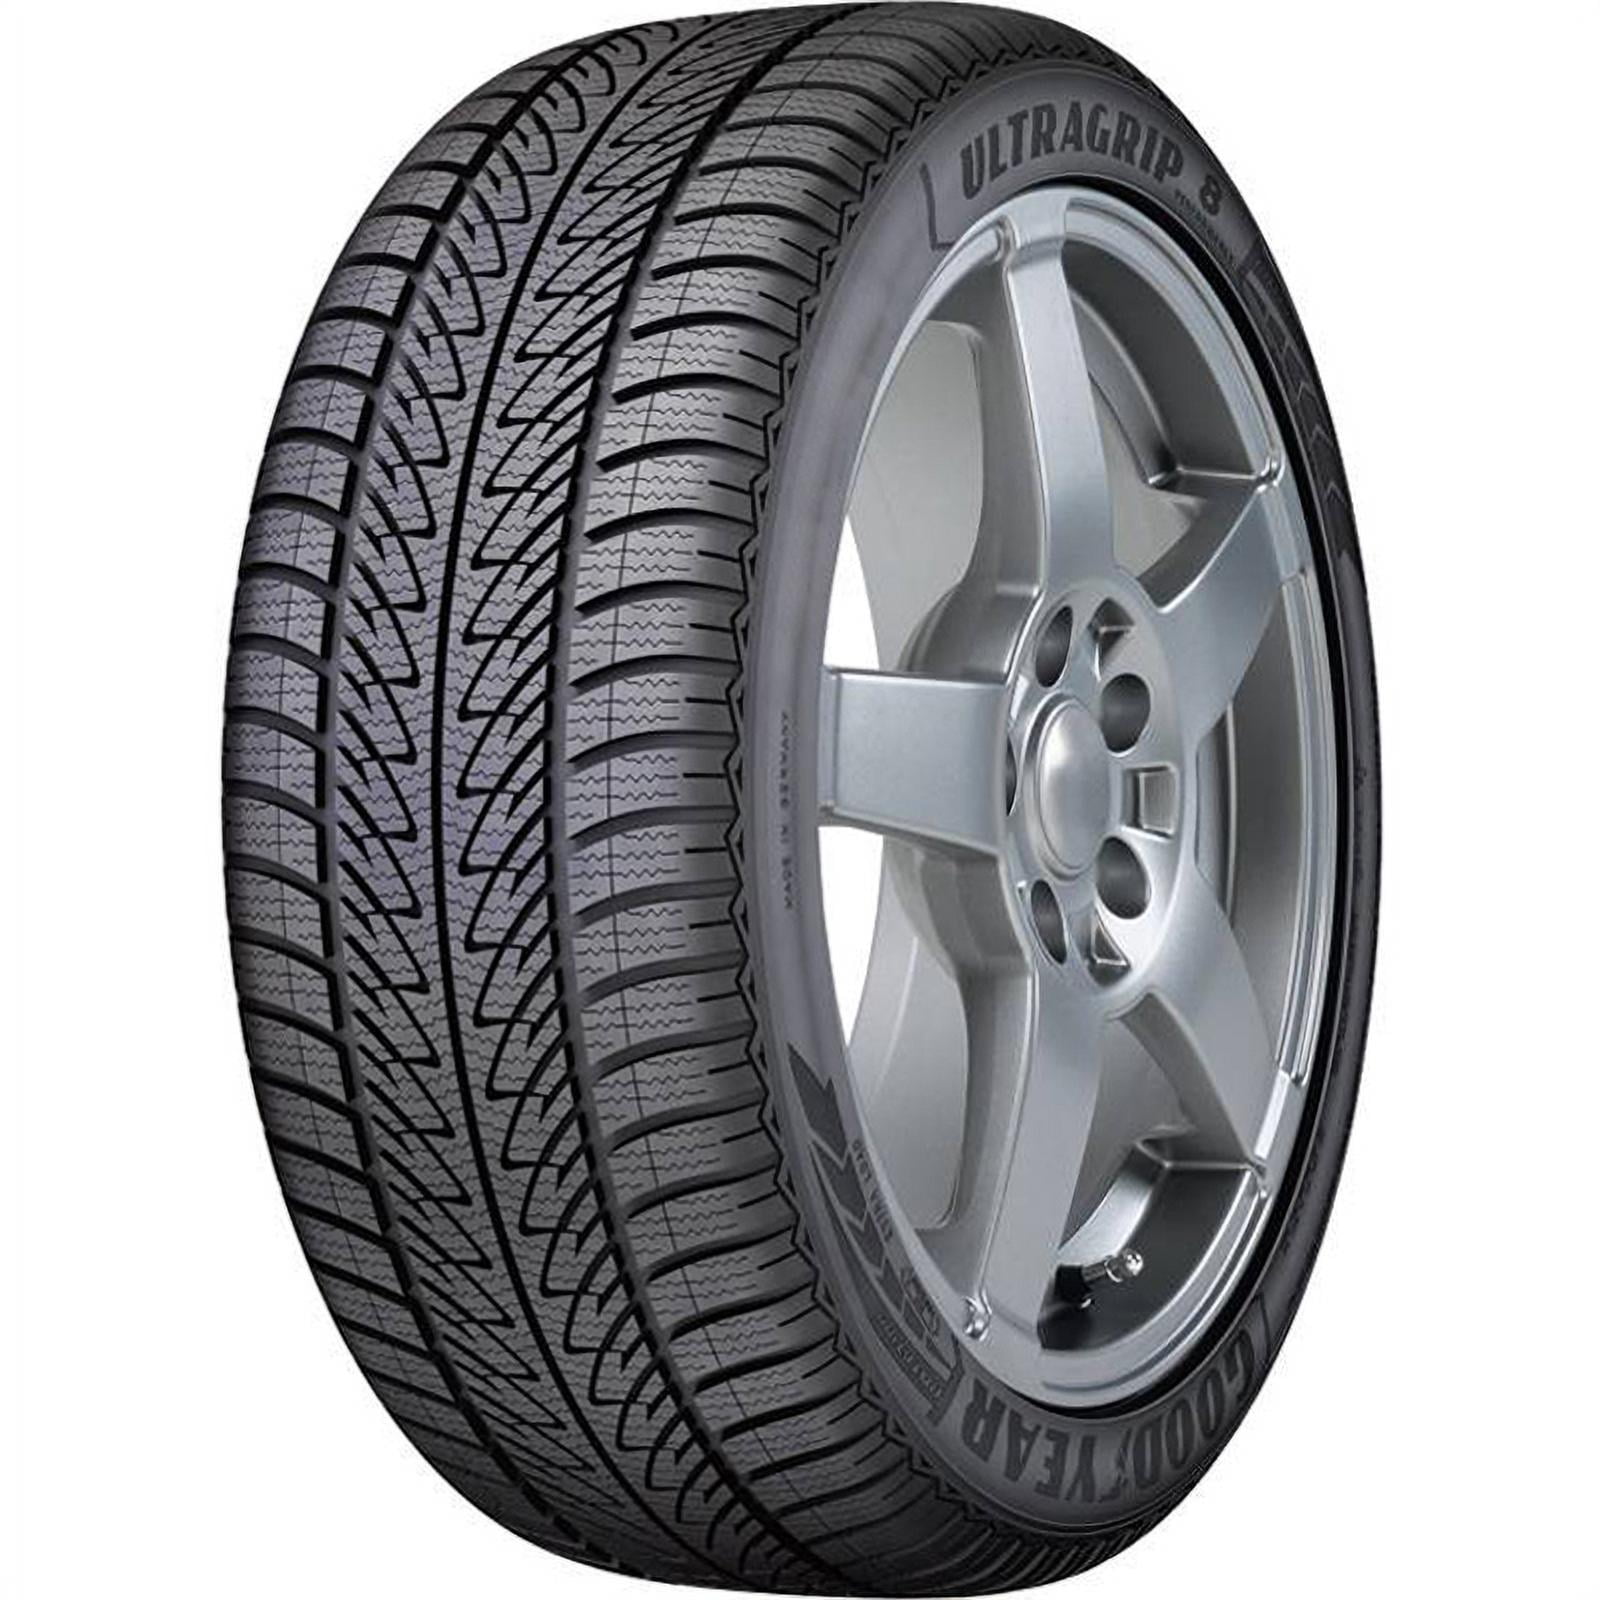 (Studless) Goodyear 108H 8 Snow Ultra Grip Tire 255/60R18 Performance Winter